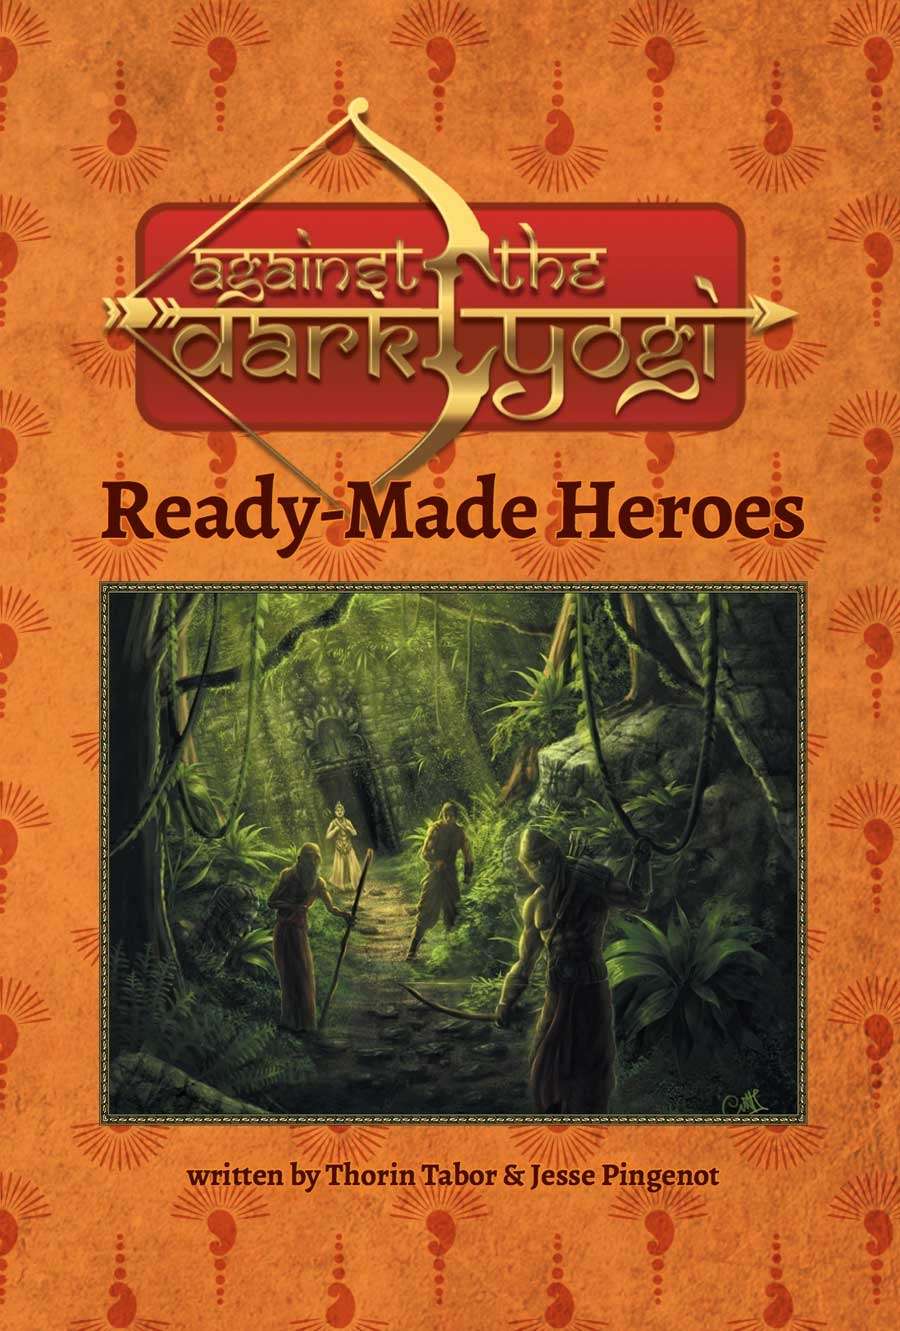 Against the Dark Yogi: Ready-Made Heroes